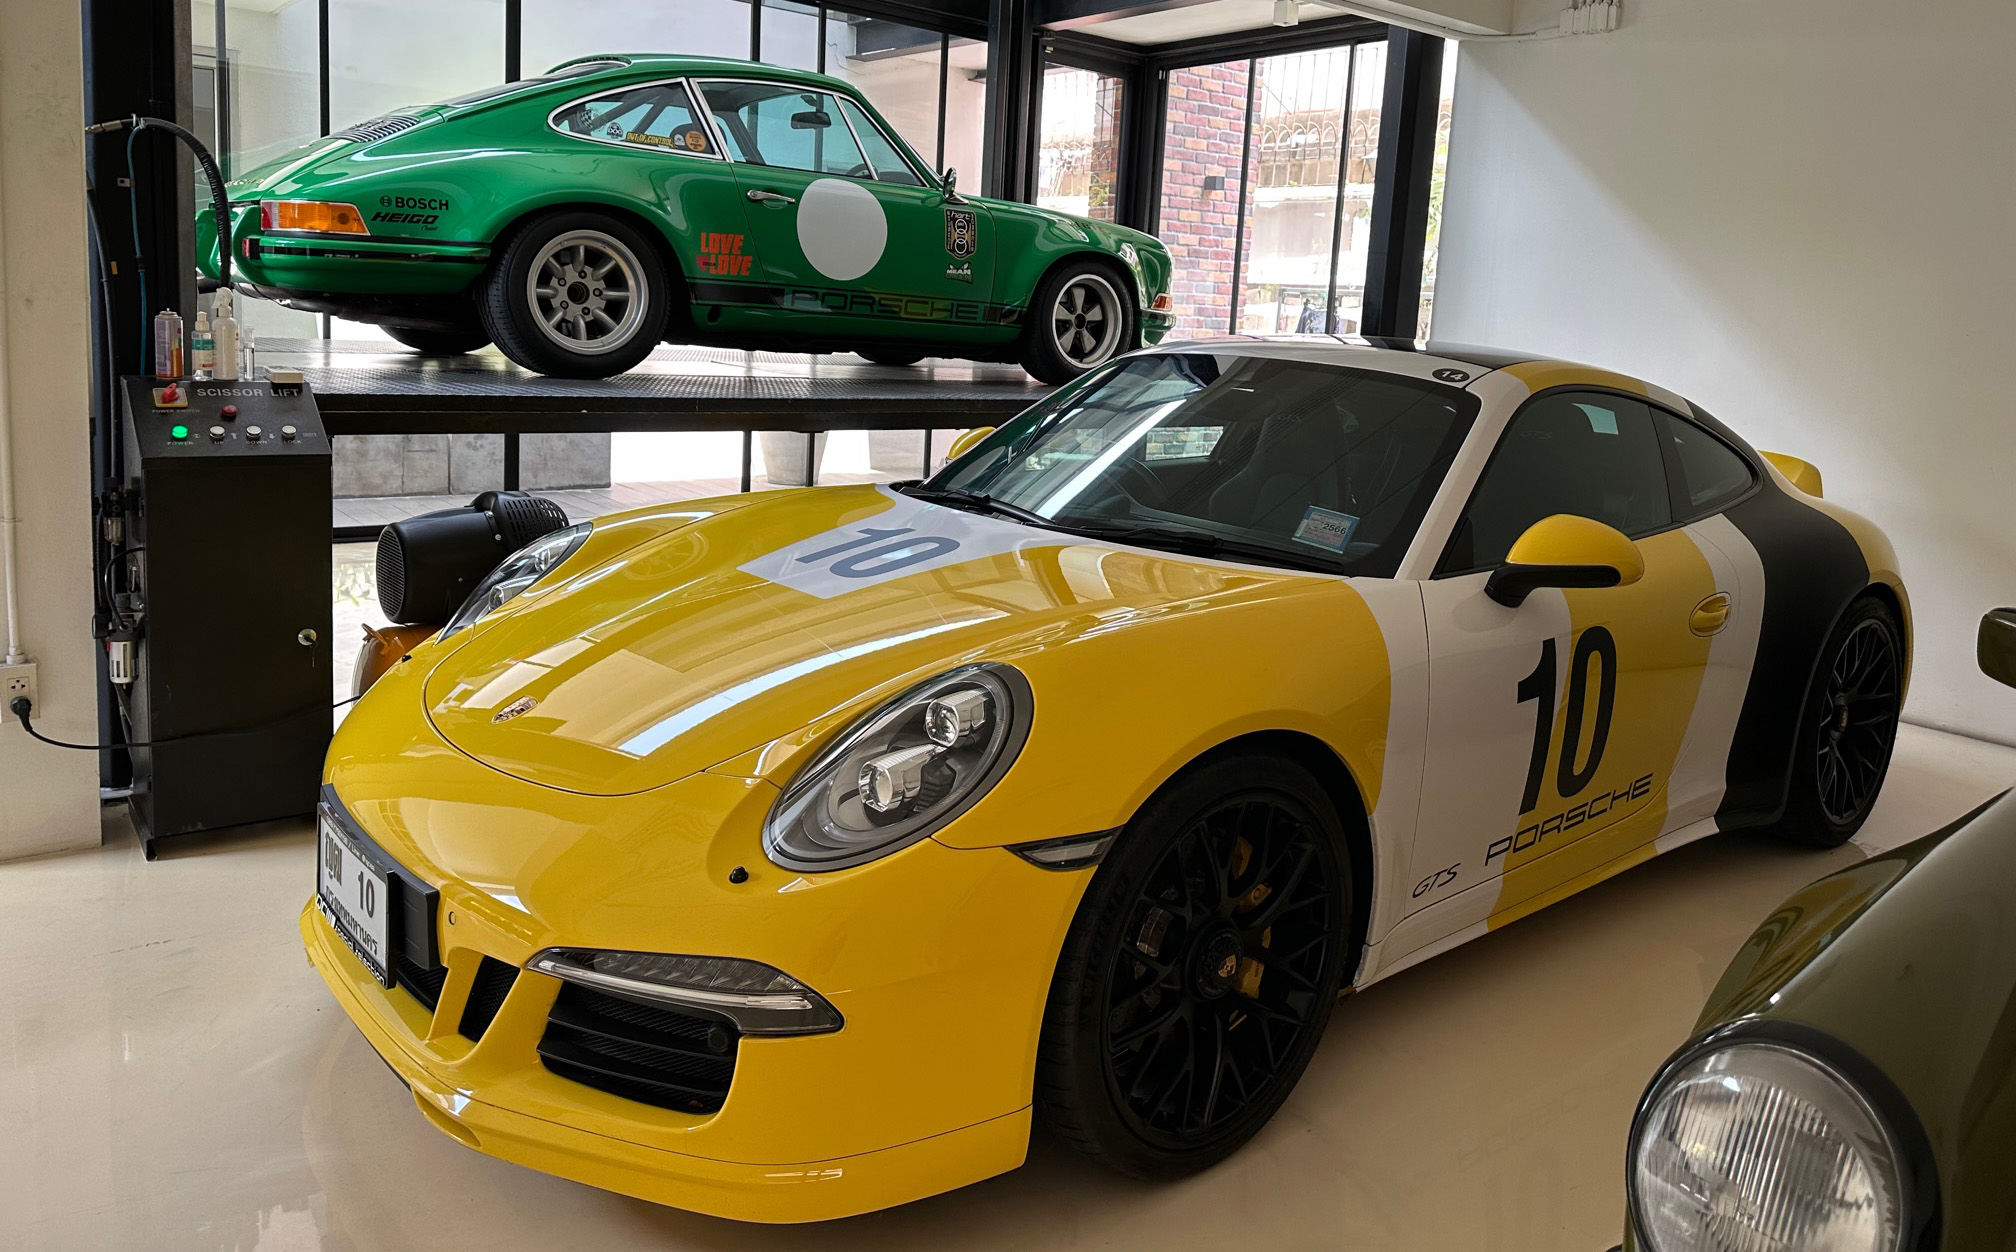 A pair of Porsche 911 sportscars in a private garage